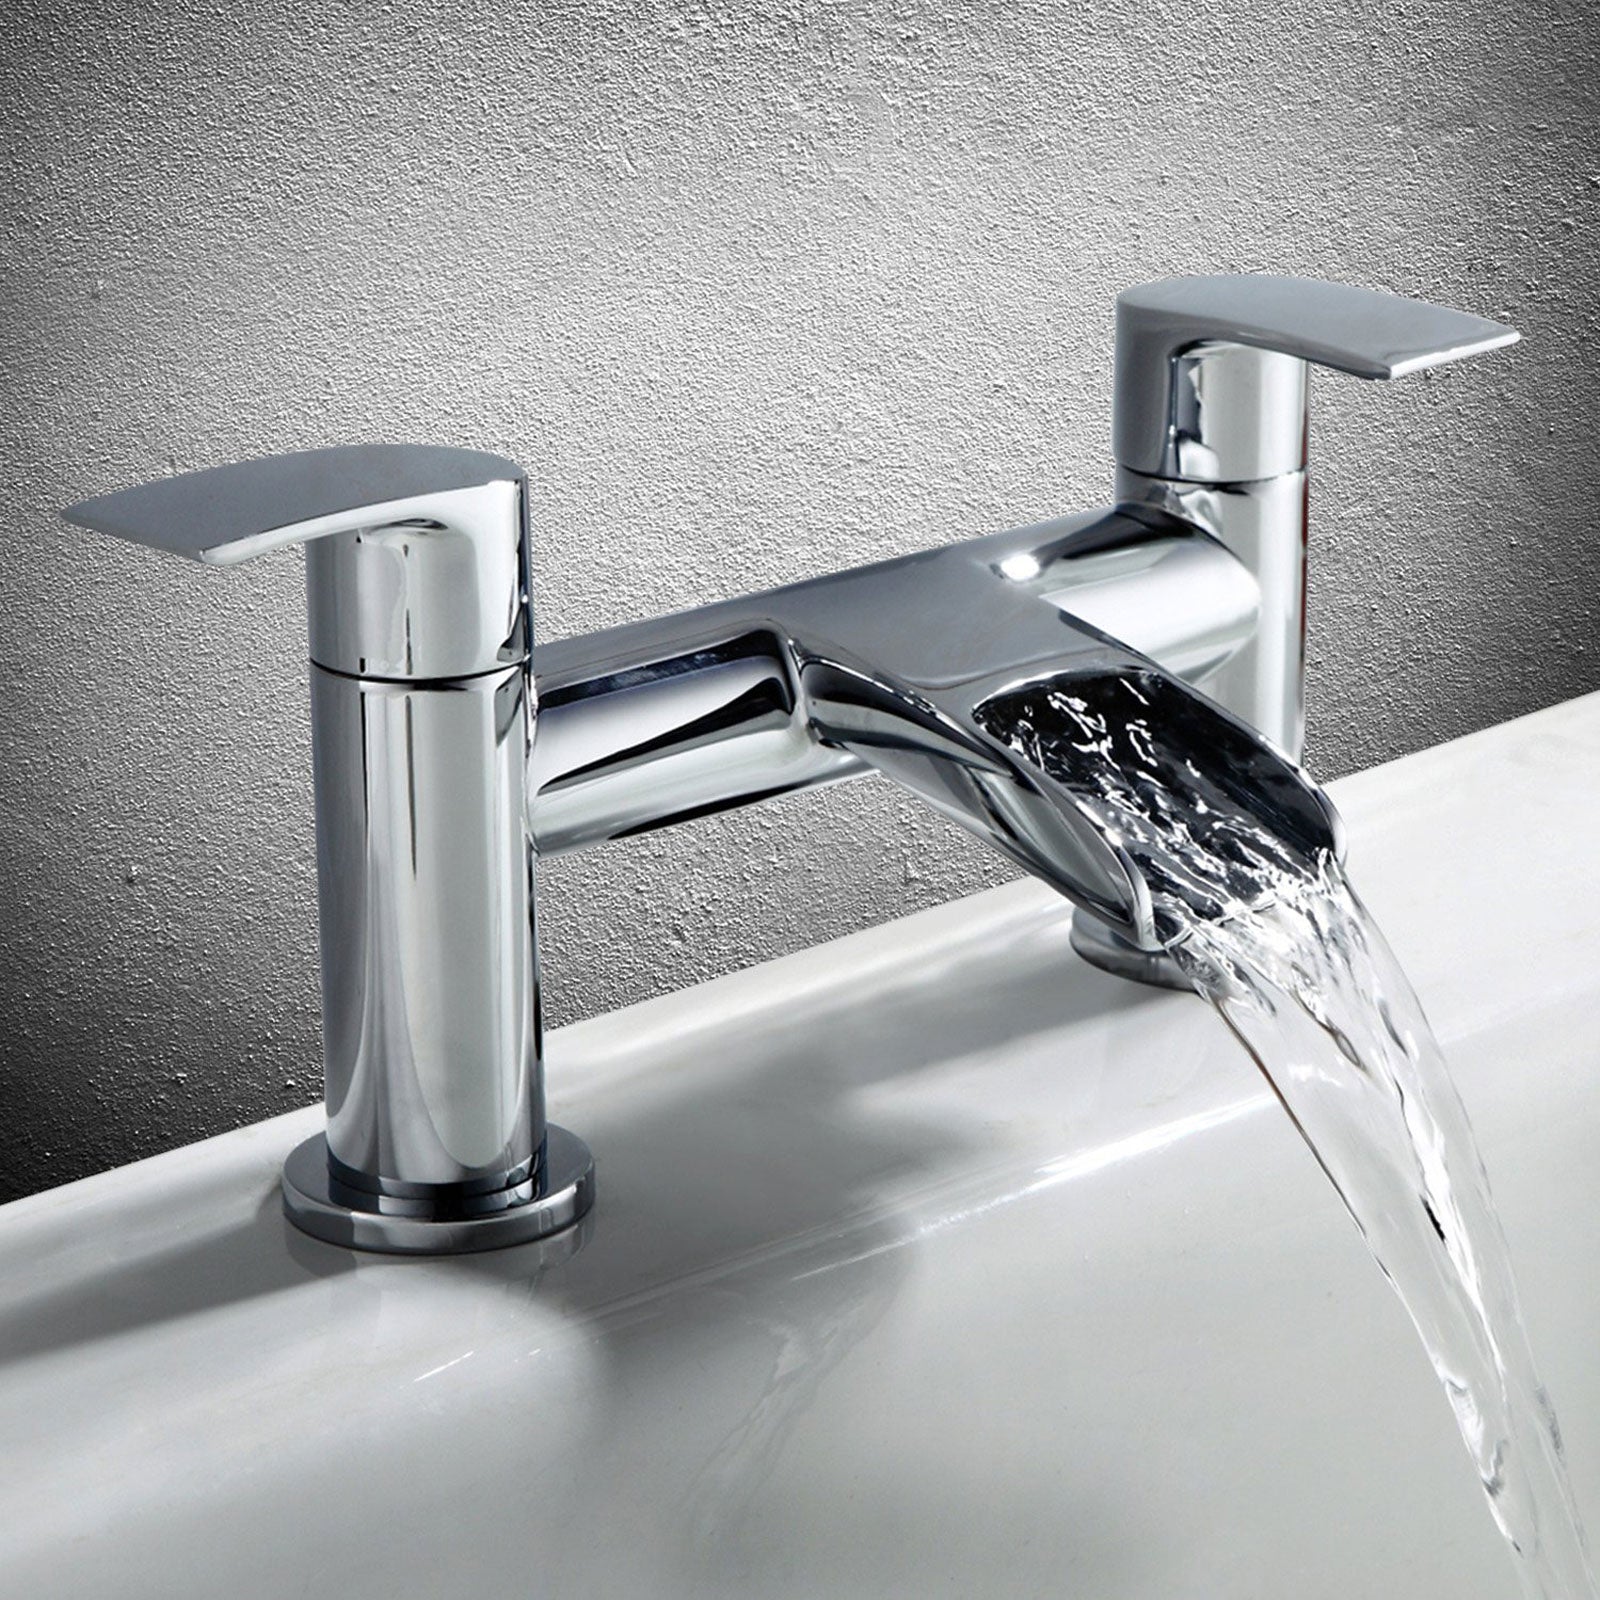 Virgo Waterfall Bathroom Tap Bath Filler Chrome Modern Design Solid Brass